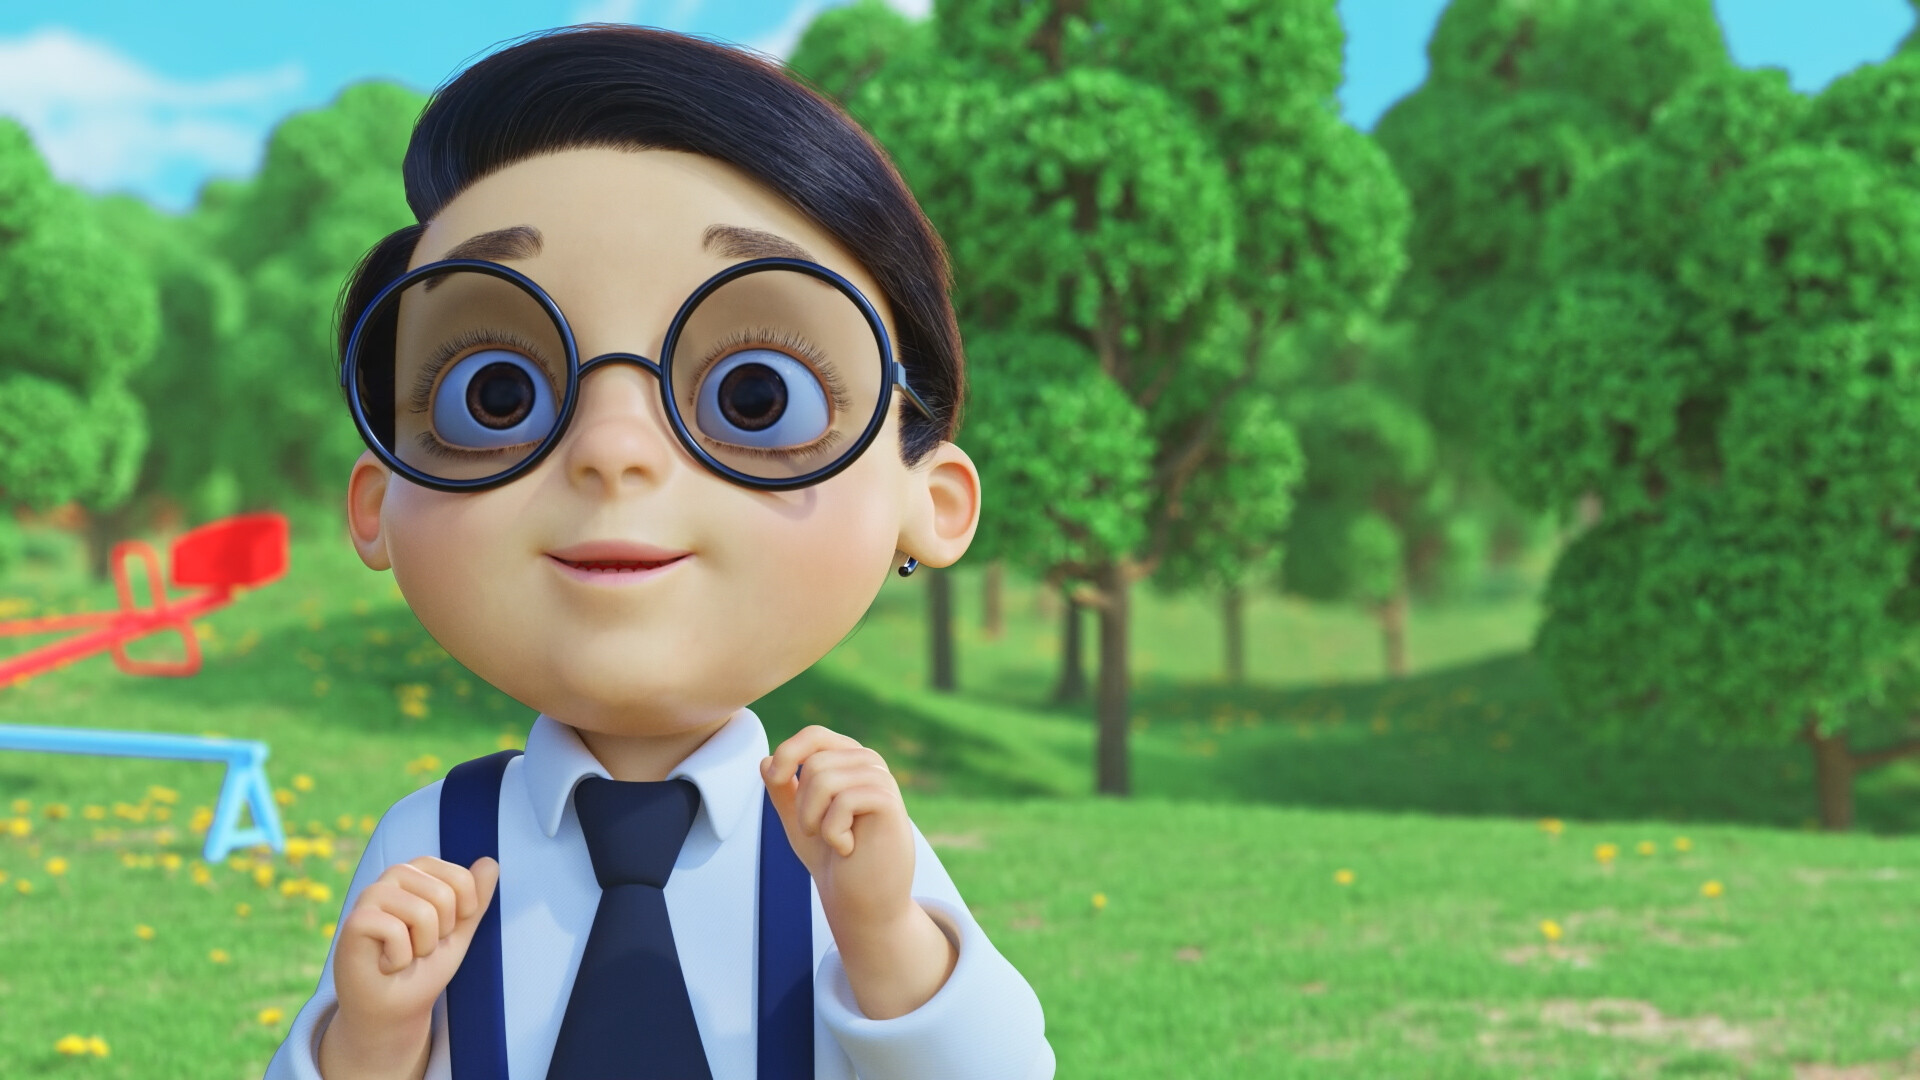 ArtStation - Cartoon Boy with glasses